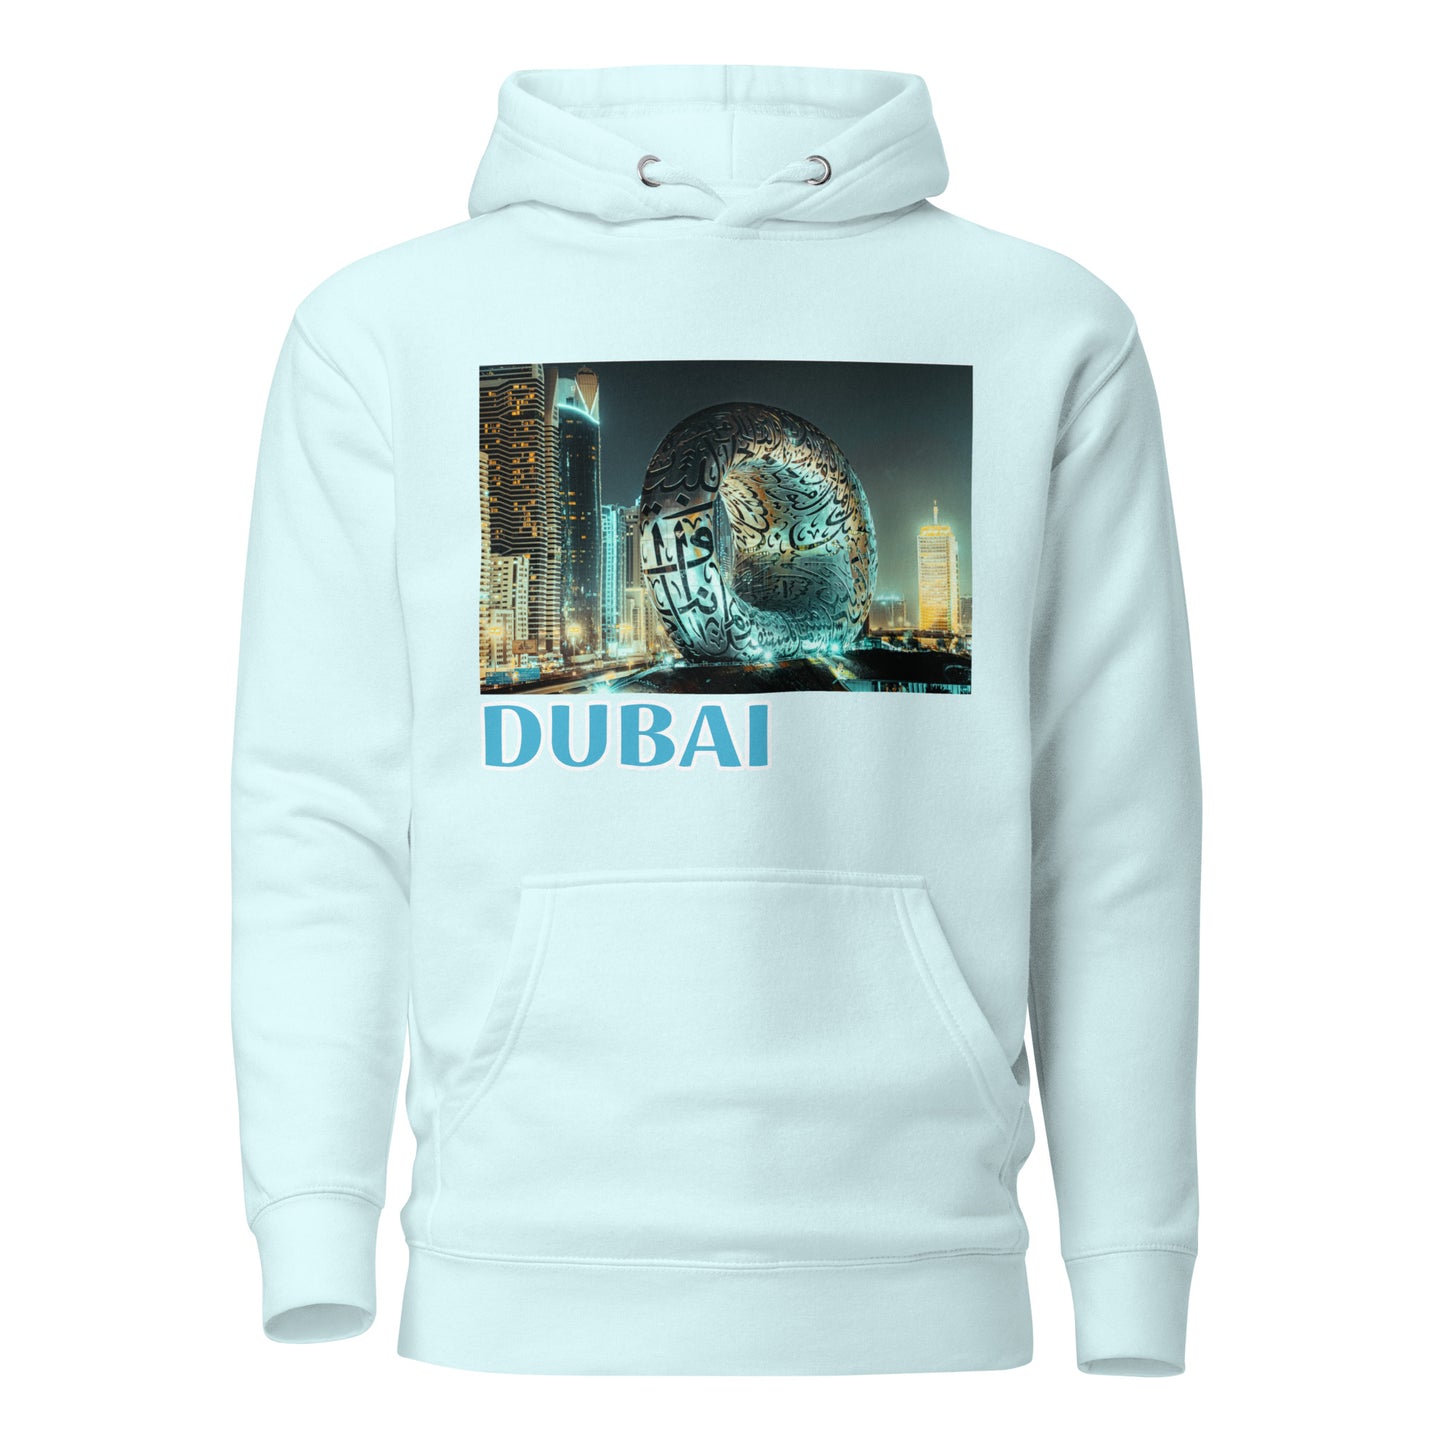 DUBAI HOODIE